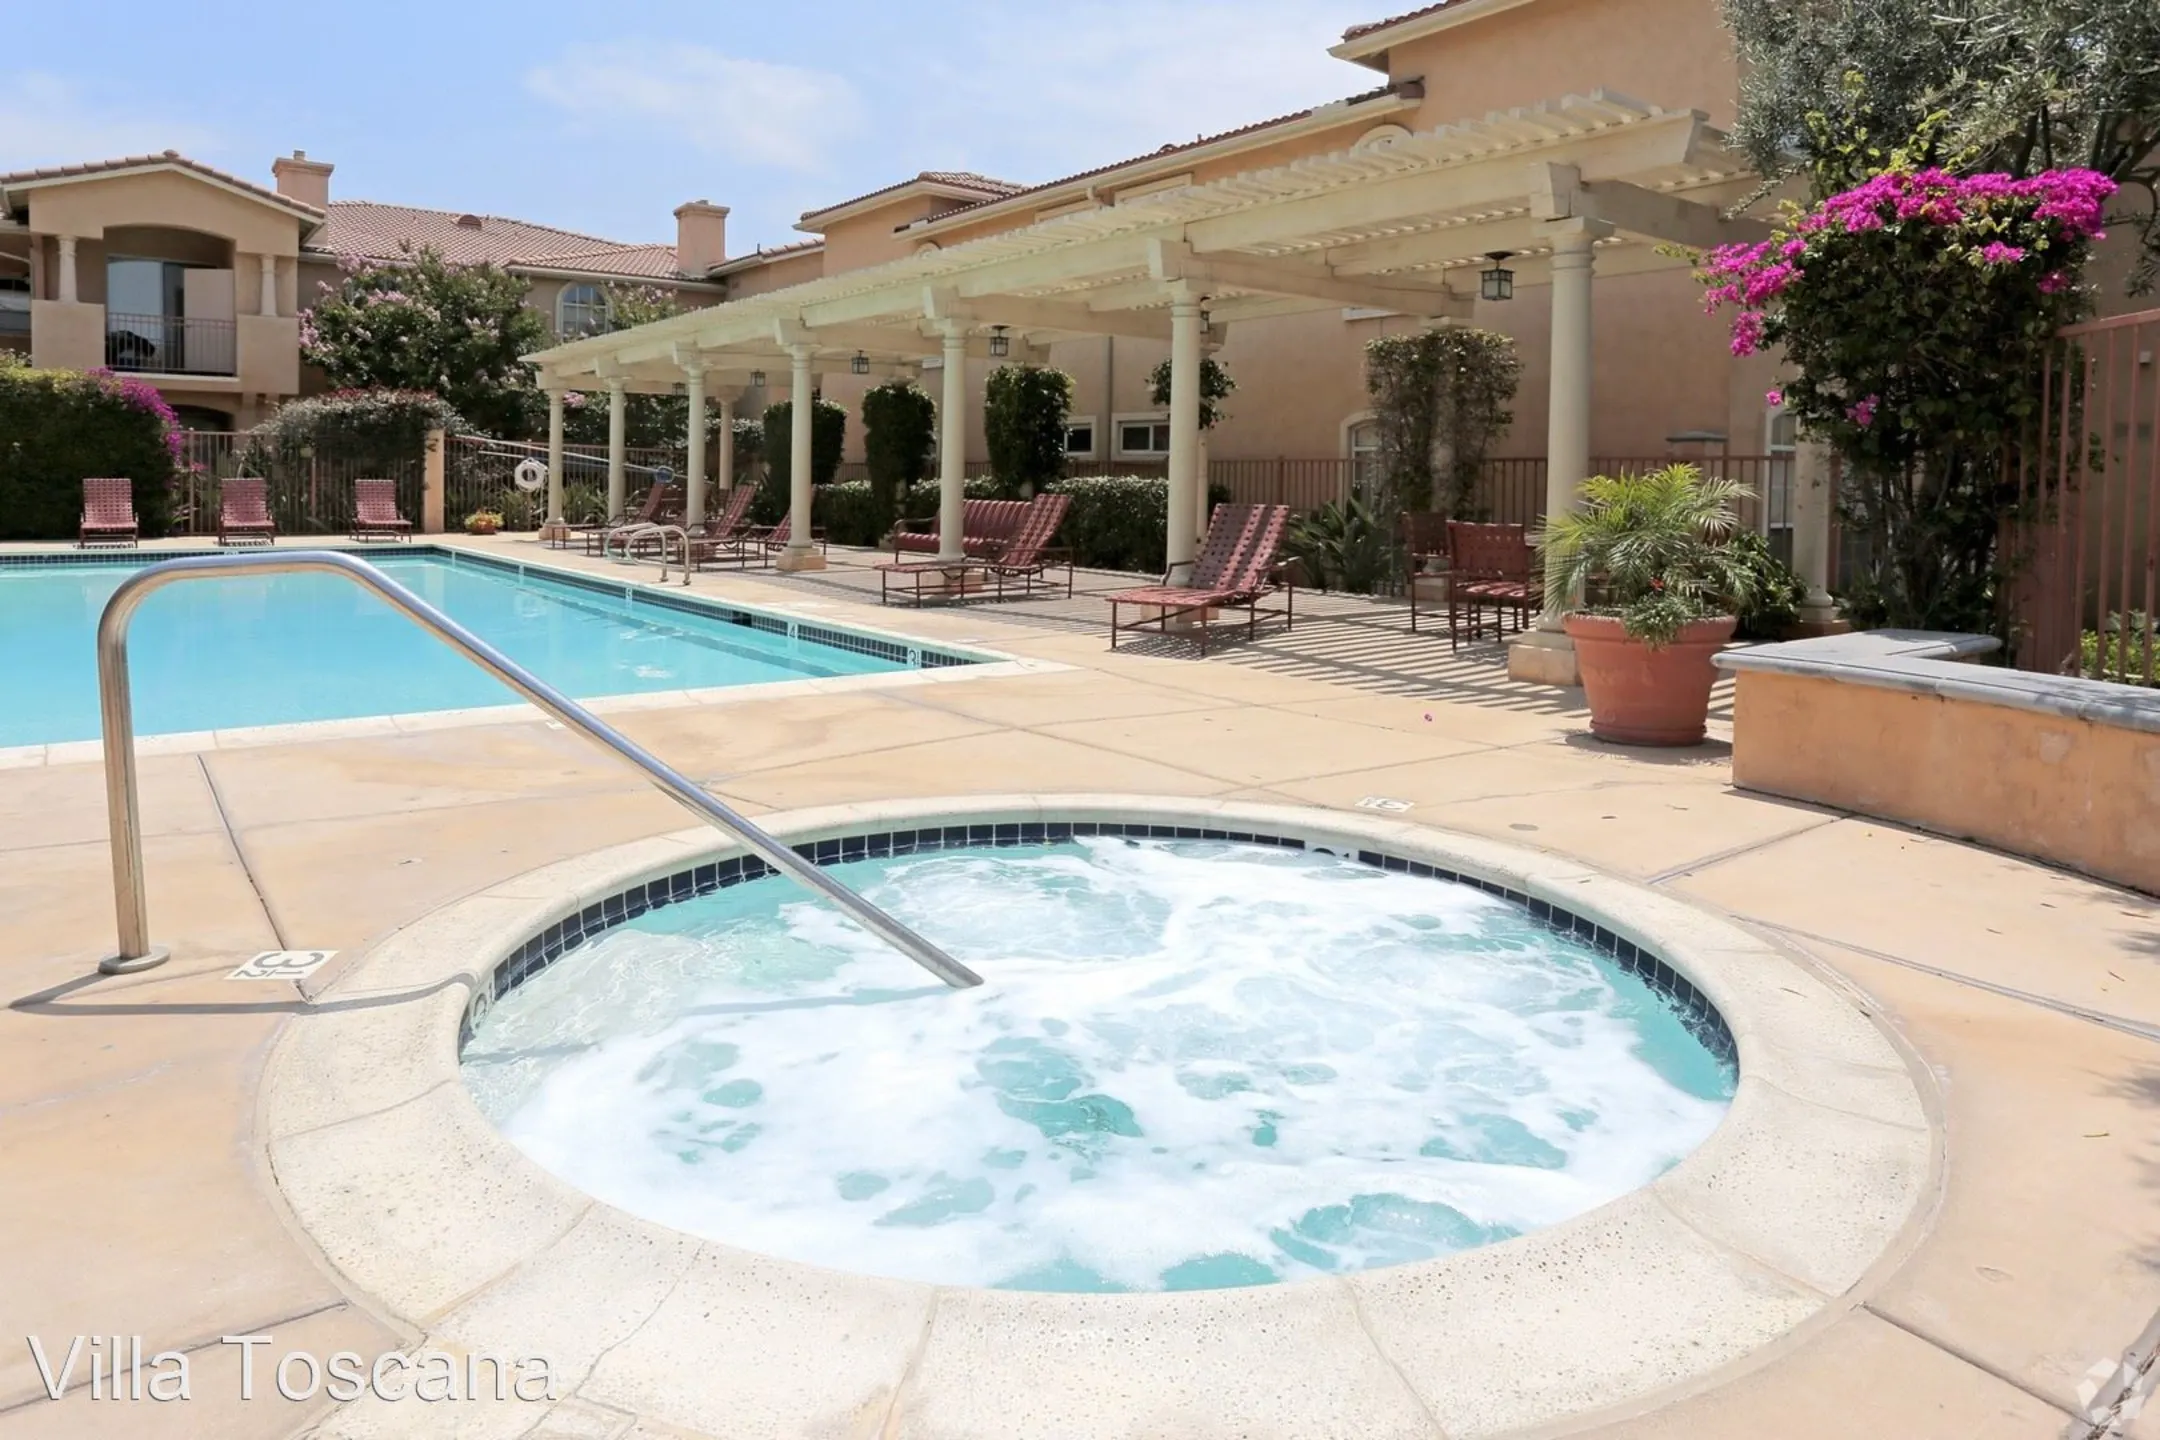 Pool - Villa Toscana - El Cajon, CA